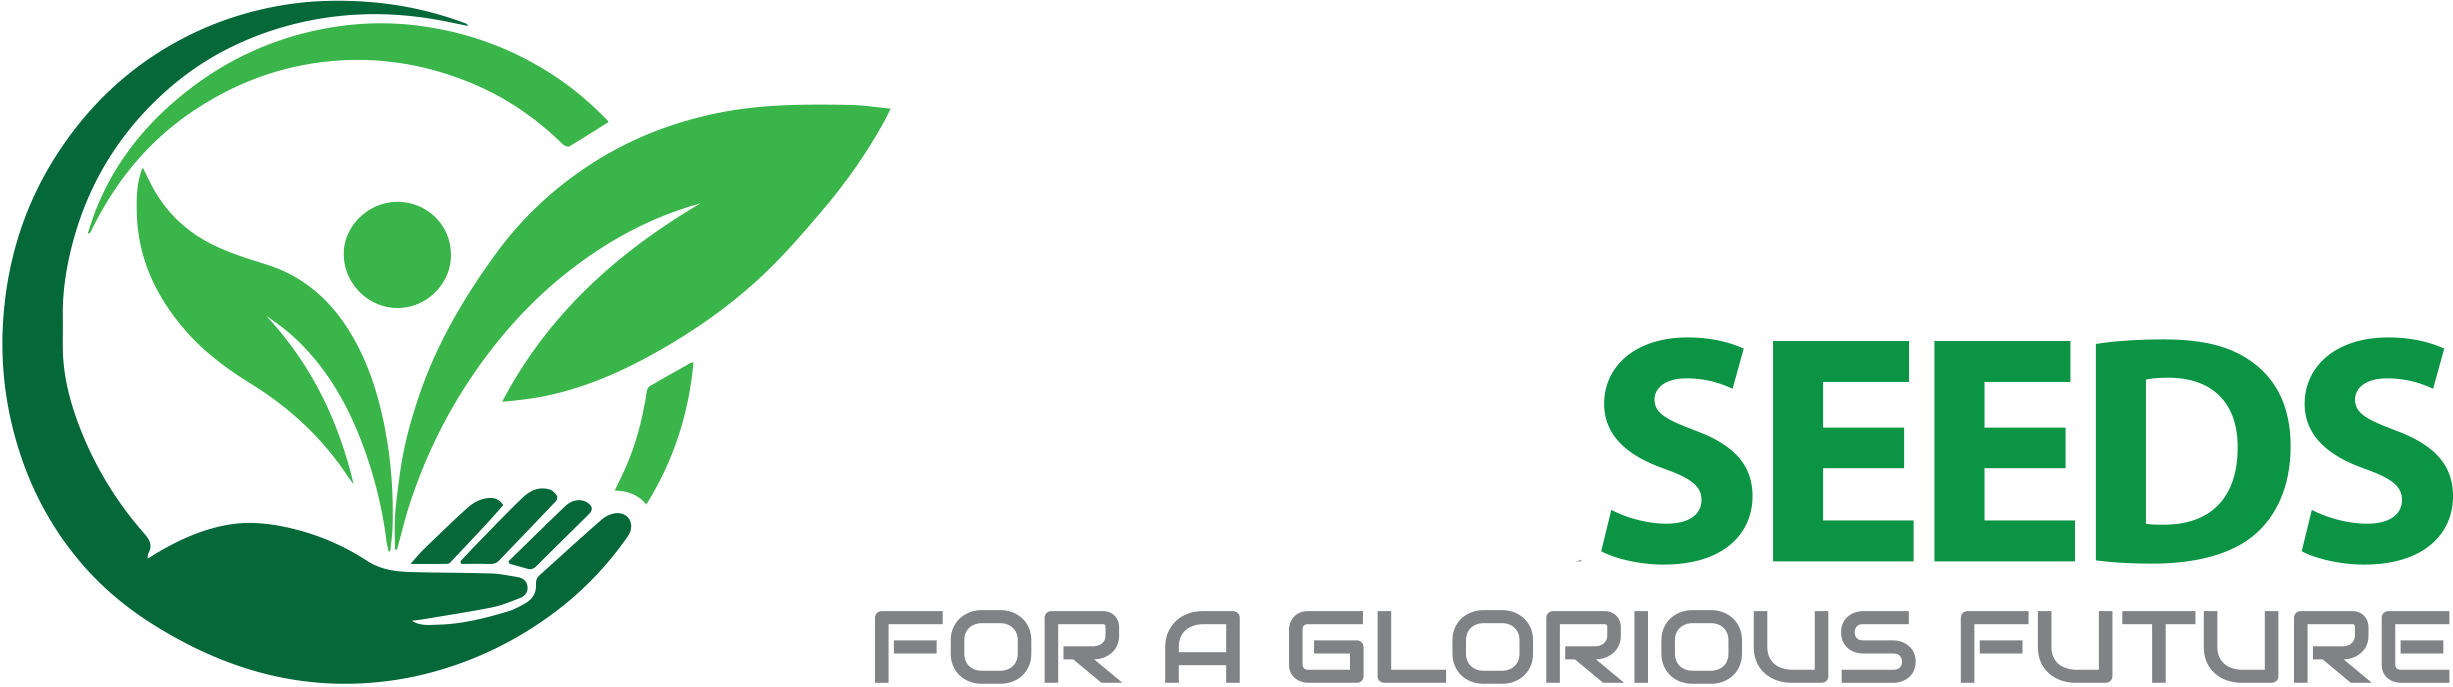 Gloria Seeds Co.